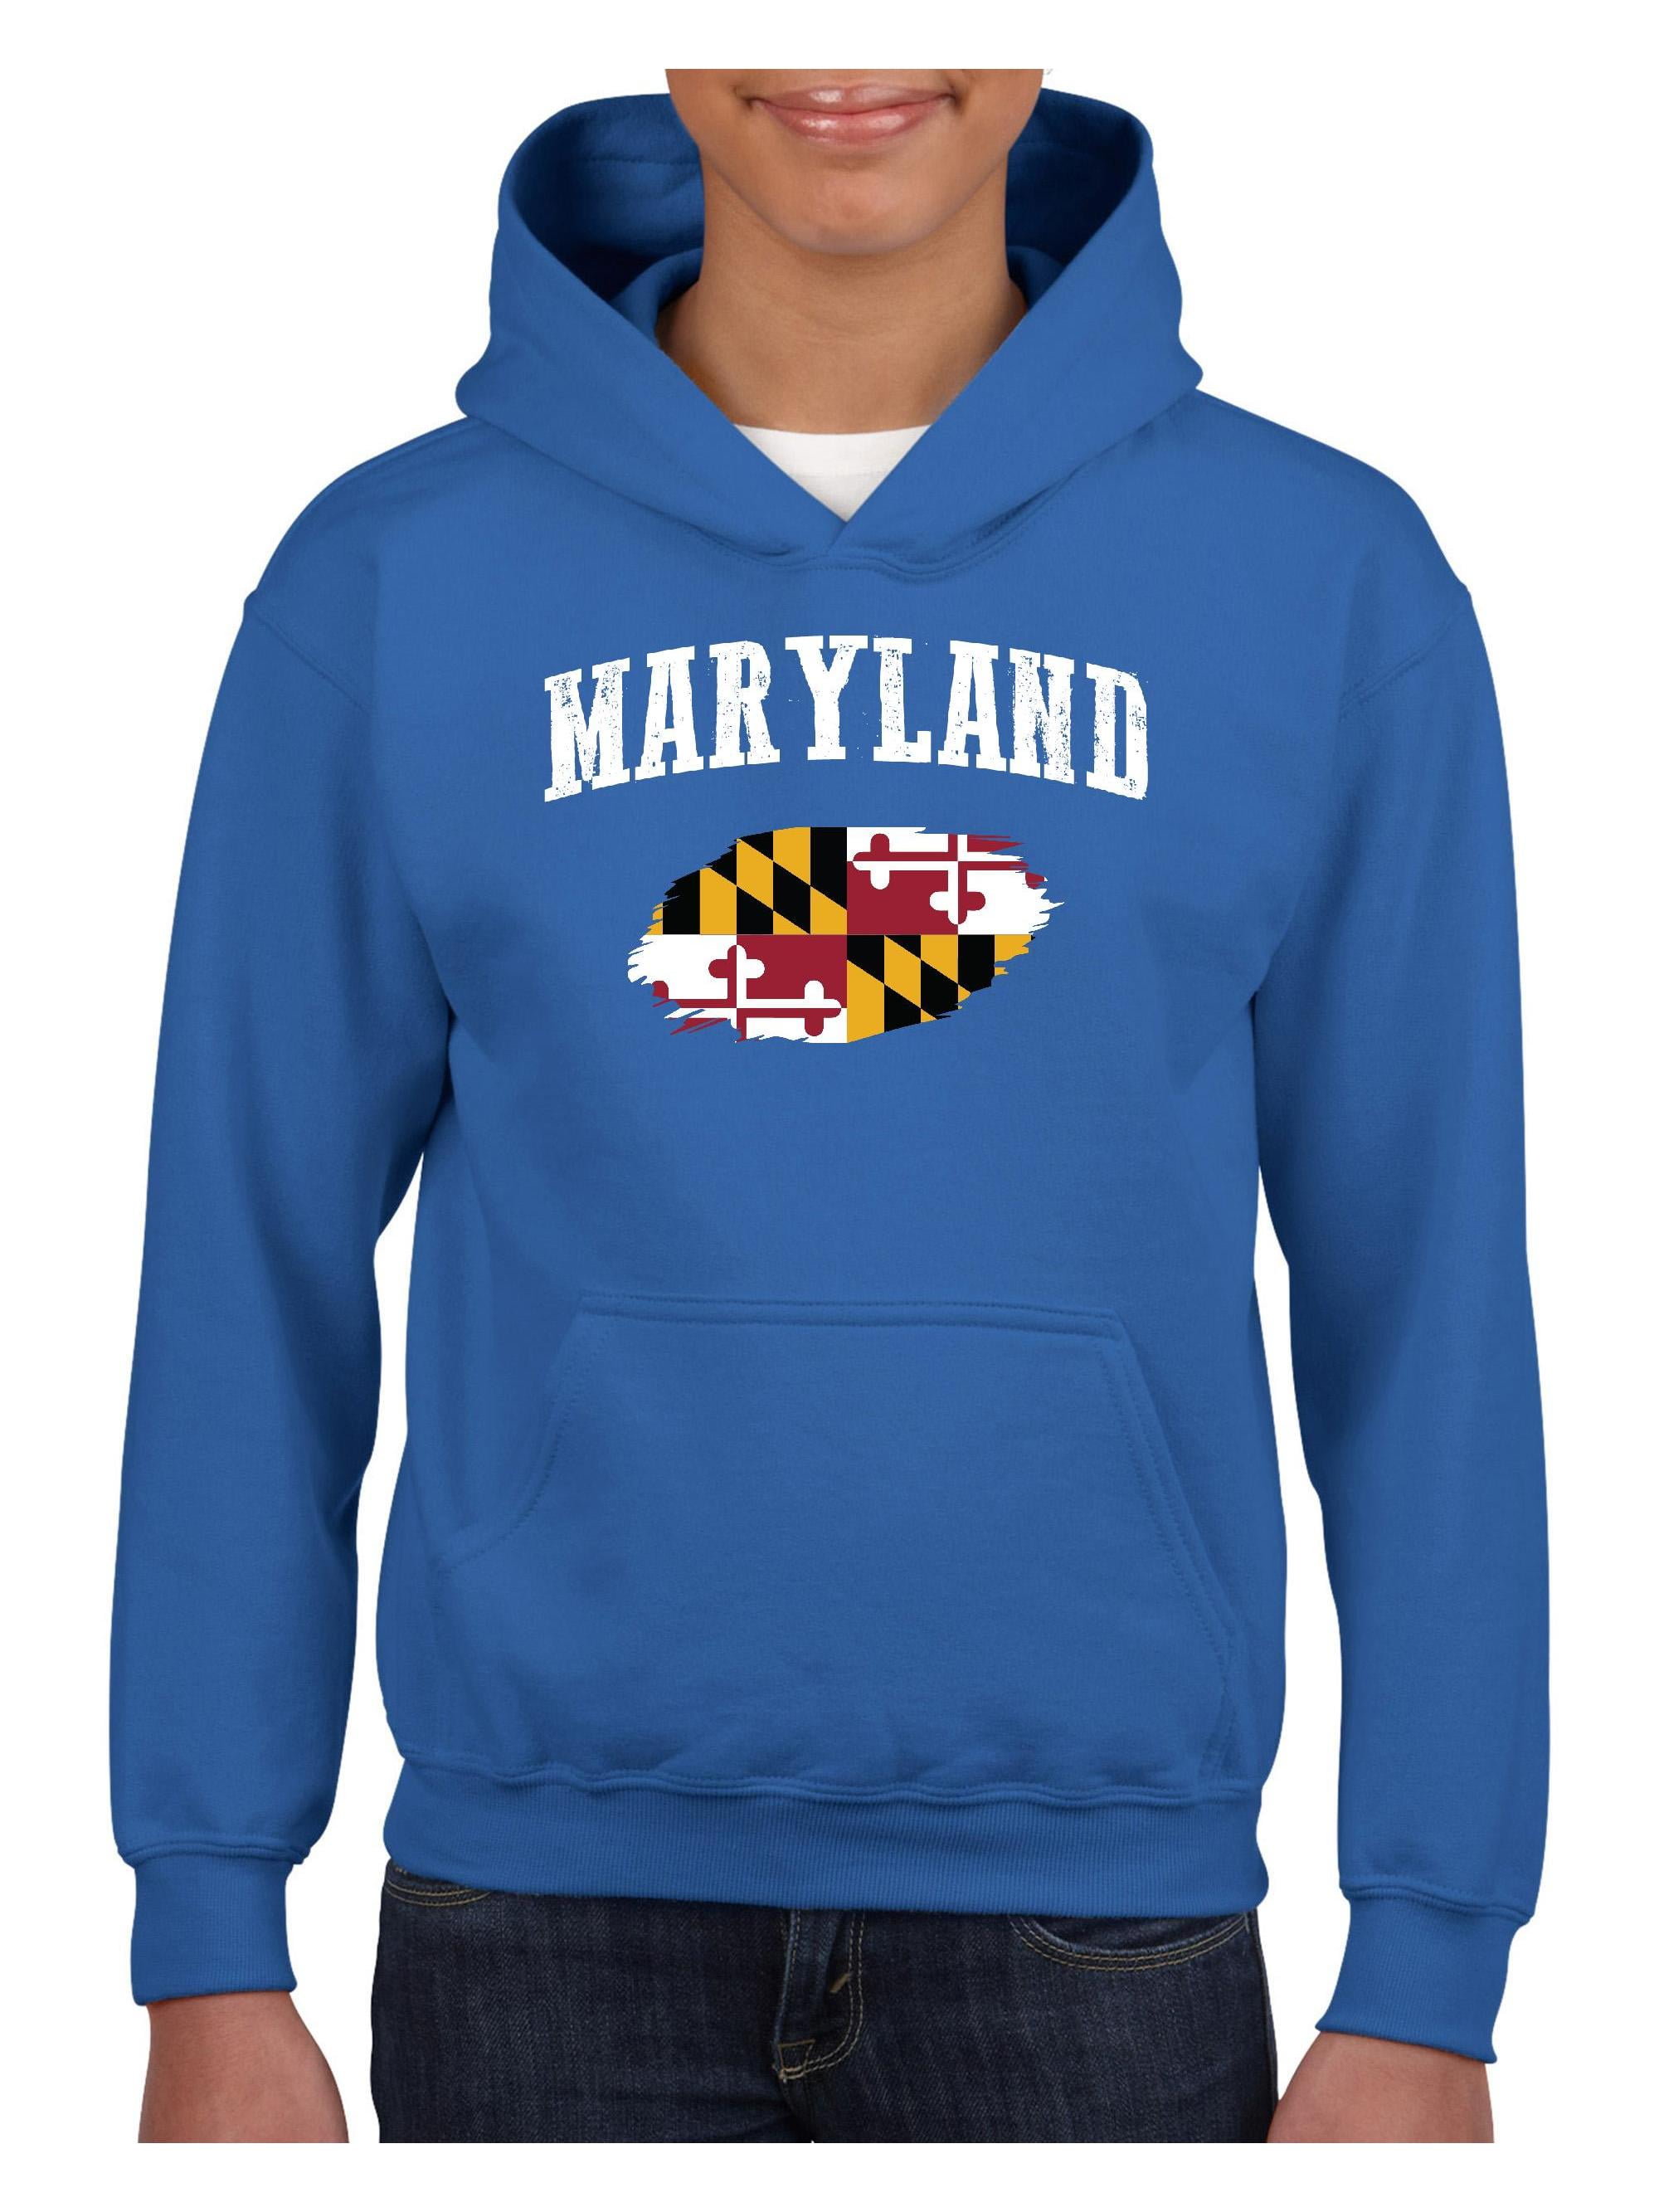 WWTBBJ-B Maryland State Flag with Stars Cool Adolescent Boys & Girls Unisex Sweater Keep Warm